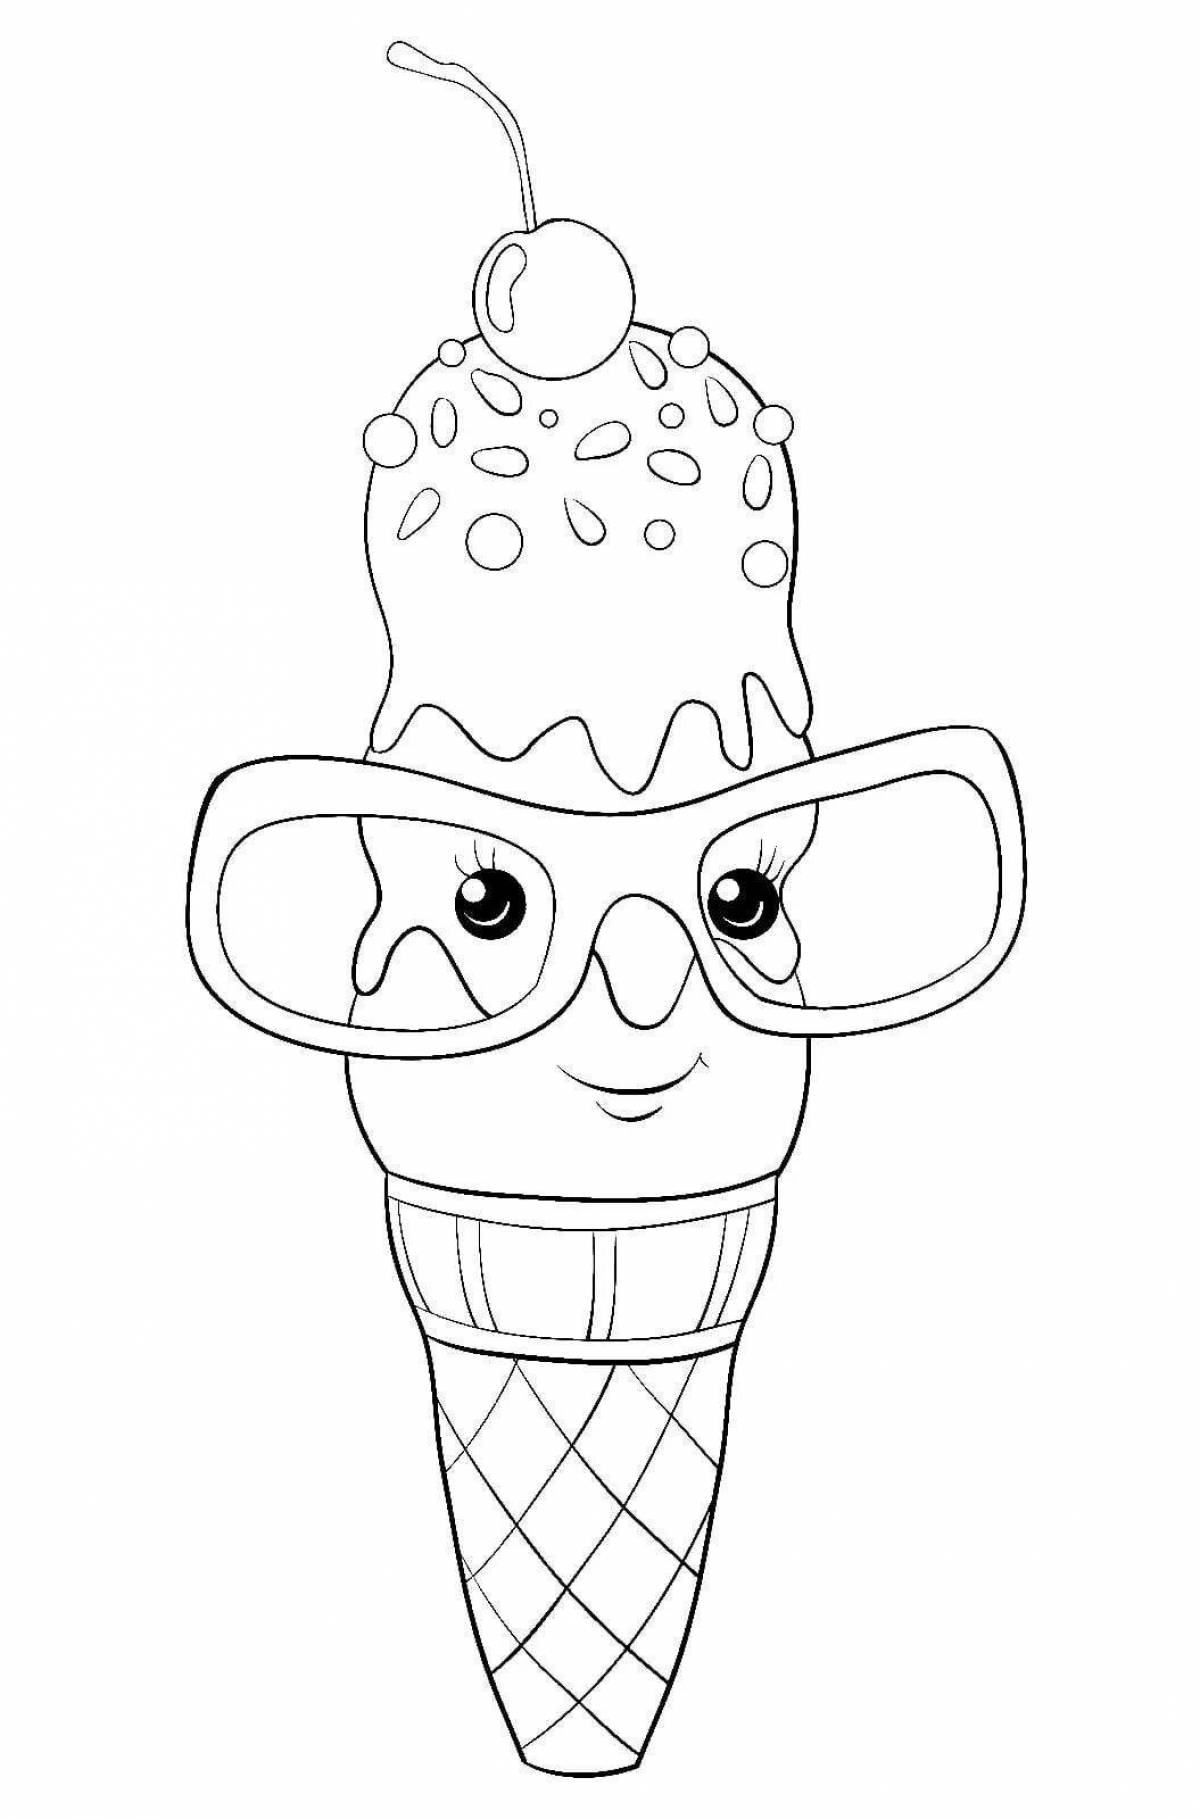 Coloring page joyful ice cream mask